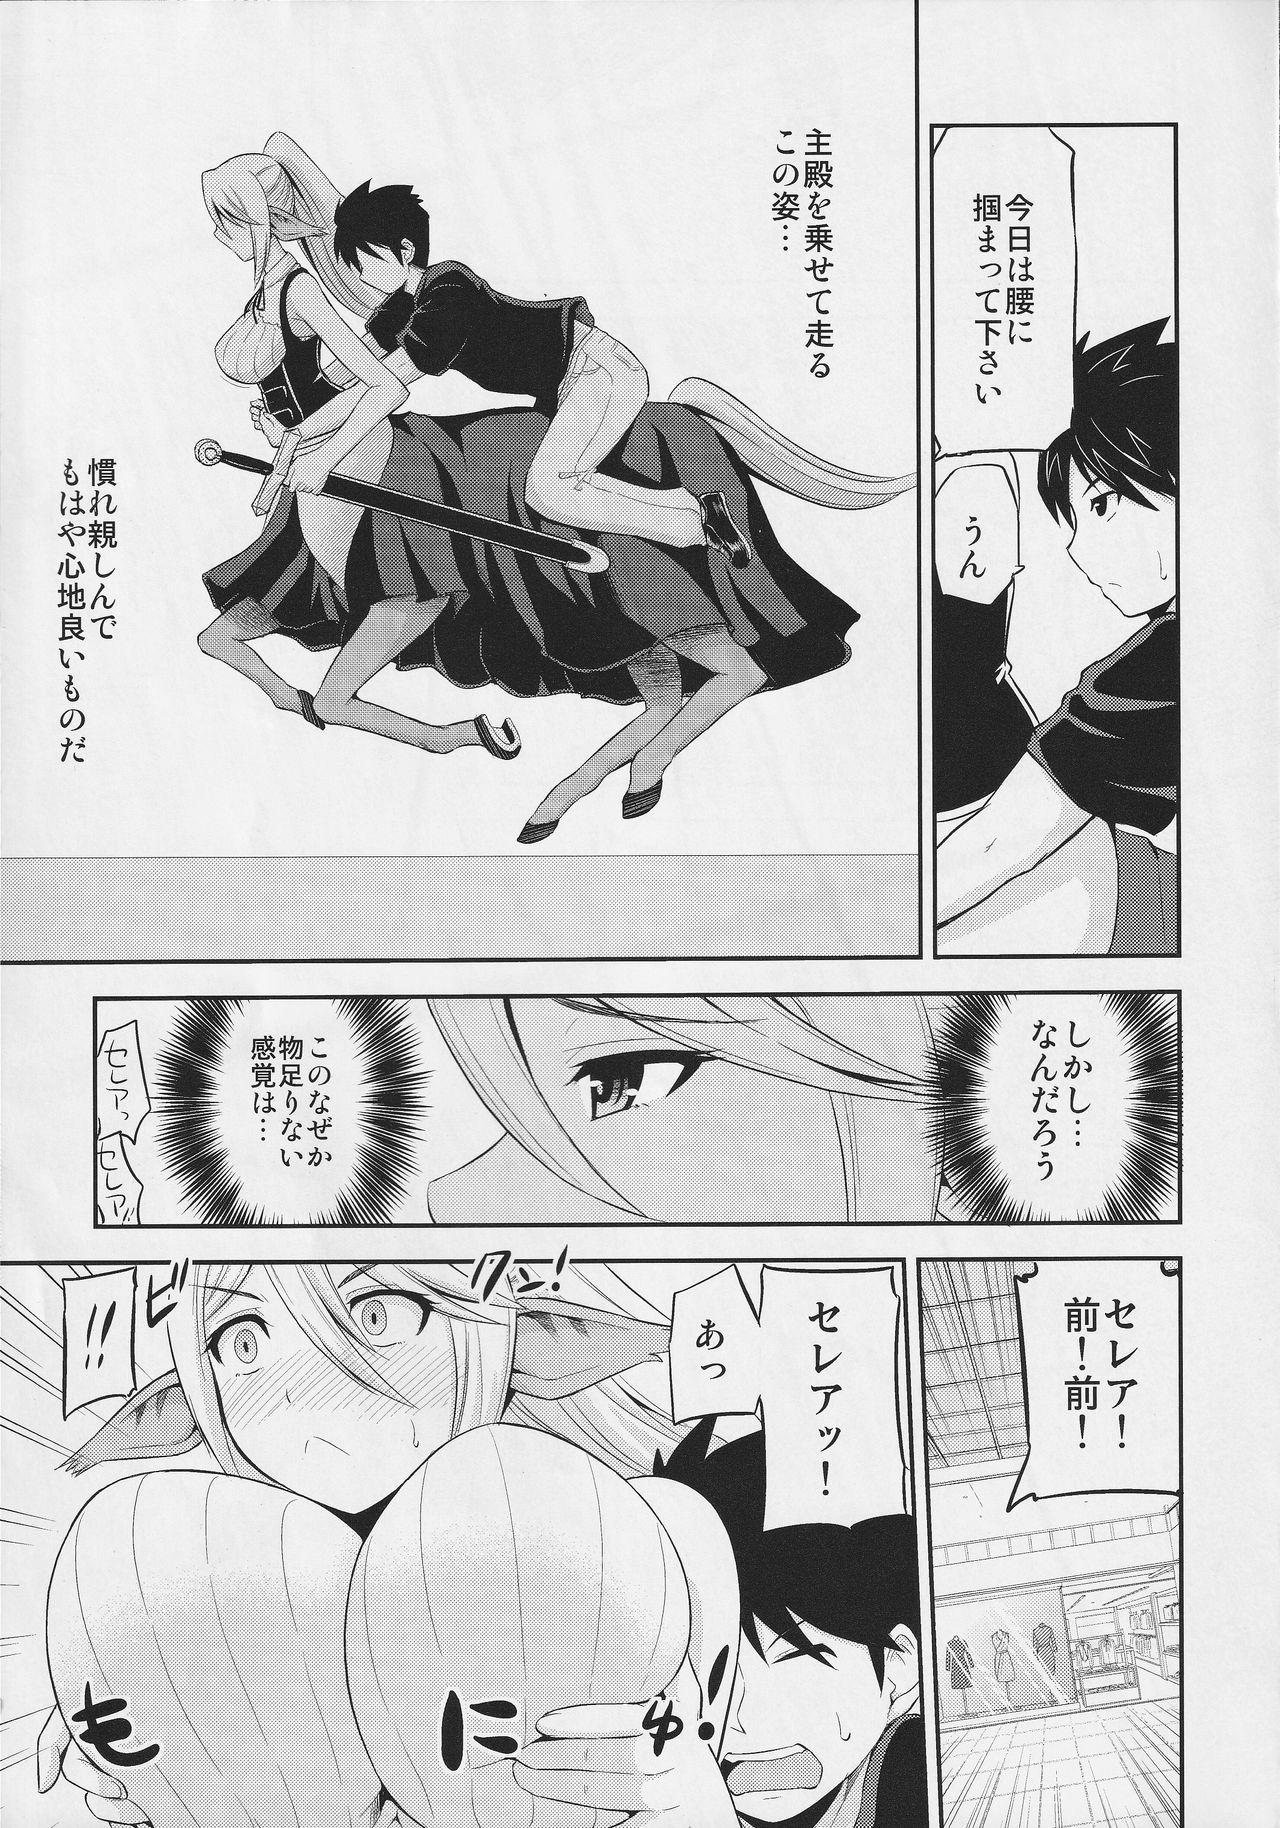 Monster Musume no Iru Nichijou SS ANTHOLOGY - Everyday Life with Monster Girls 69